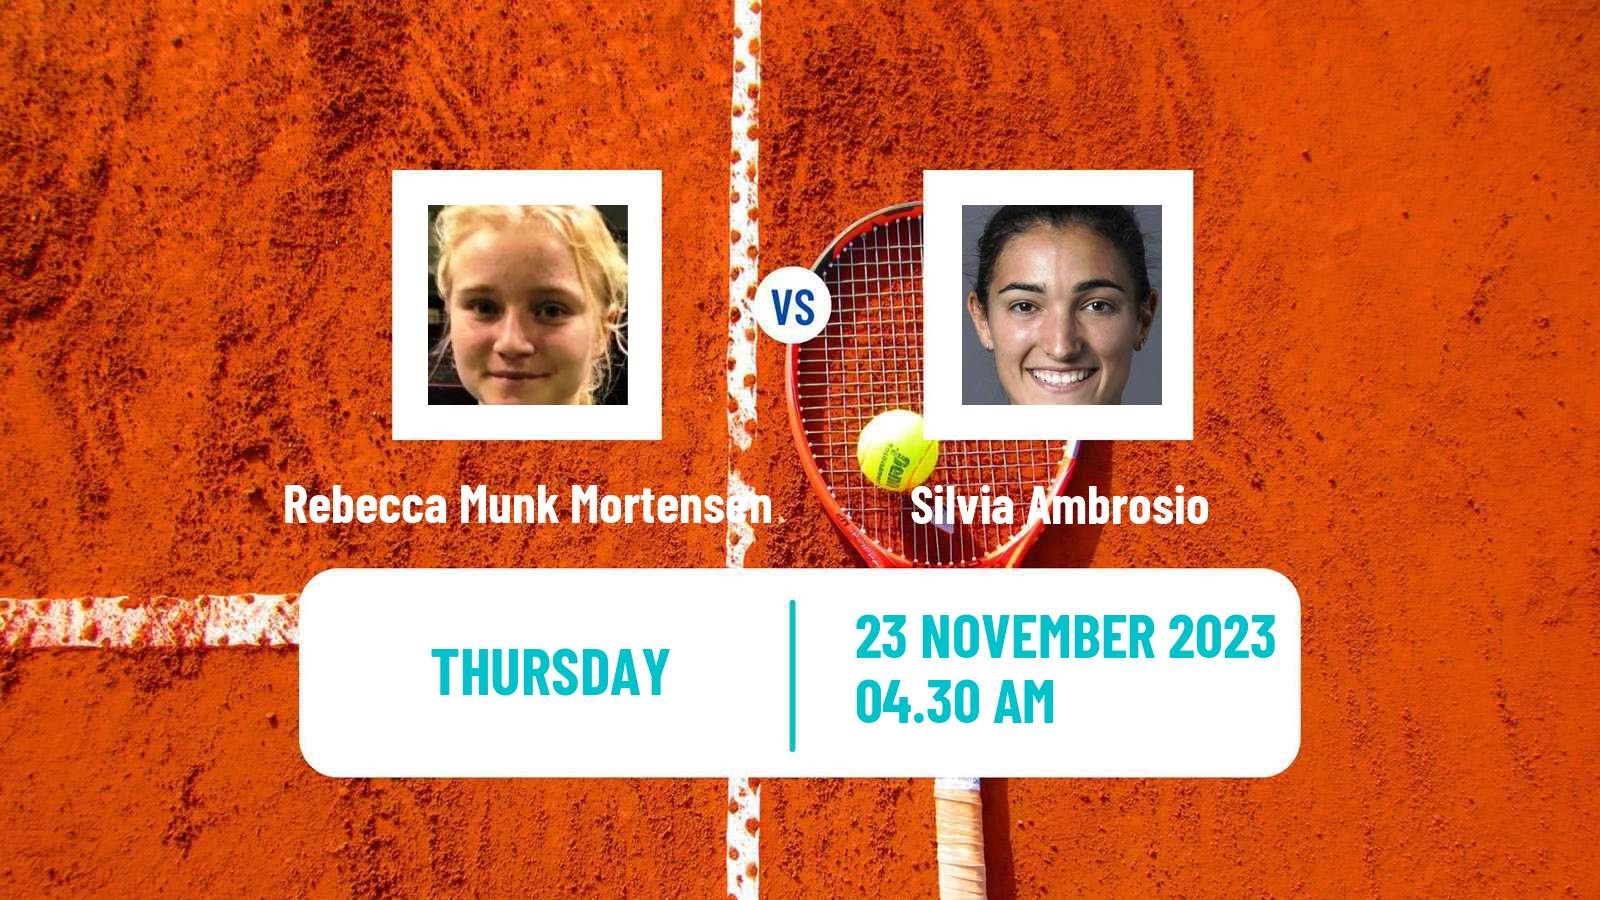 Tennis ITF W25 Limassol Women Rebecca Munk Mortensen - Silvia Ambrosio